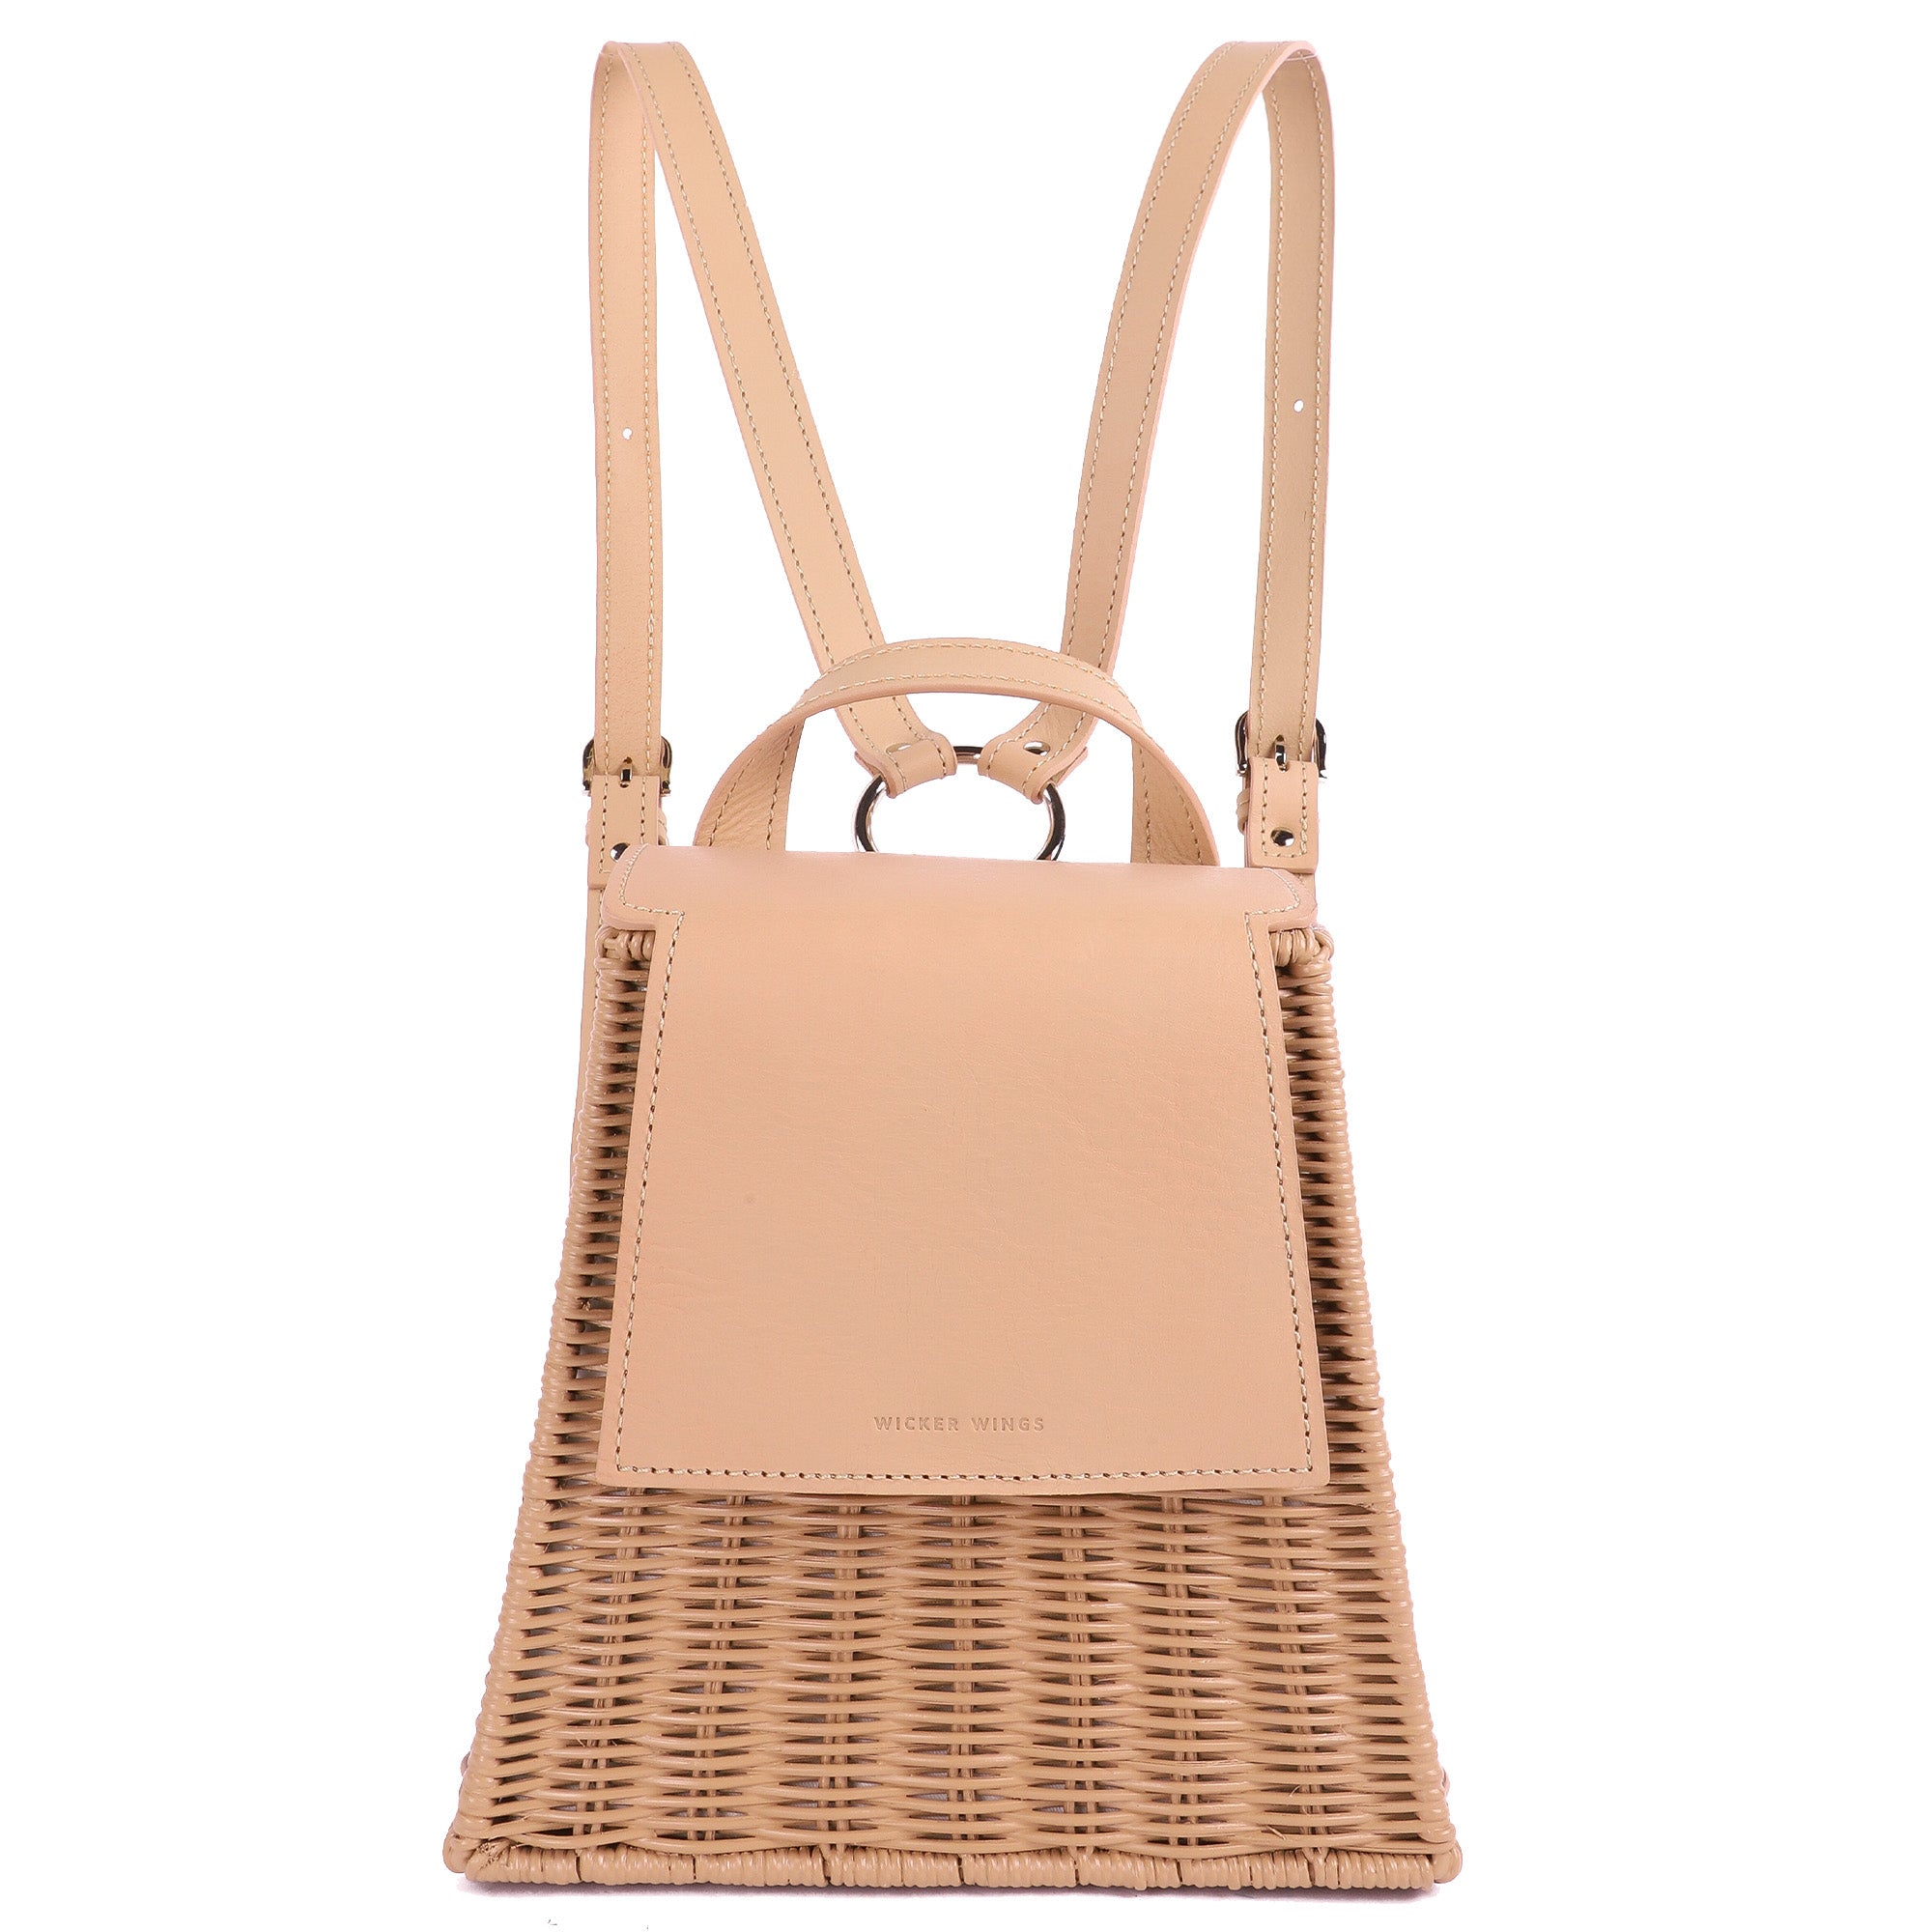 Lian-Natural-Cream-Front-1-Wicker-Wings-Wicker-Bag-Bucket-Bag-Bags-for-Women-Designer-Handbags-Beach-Bag-Summer-Bag-Straw-Bag-Black-Bag-Crossbody-Bag-Mini-Bag-Leather-Handbags-Purse